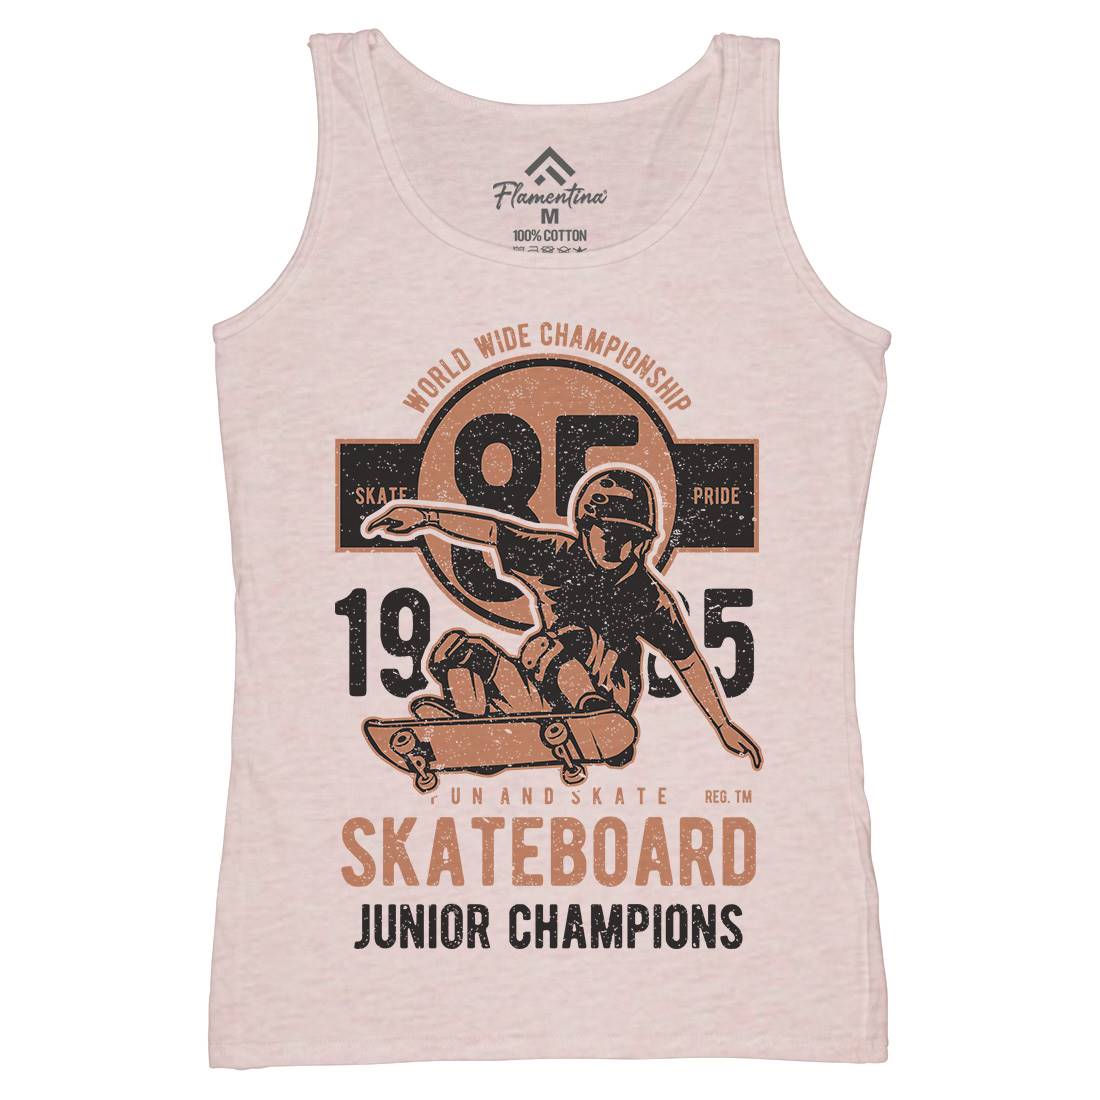 Skateboard Junior Champions Womens Organic Tank Top Vest Skate A755